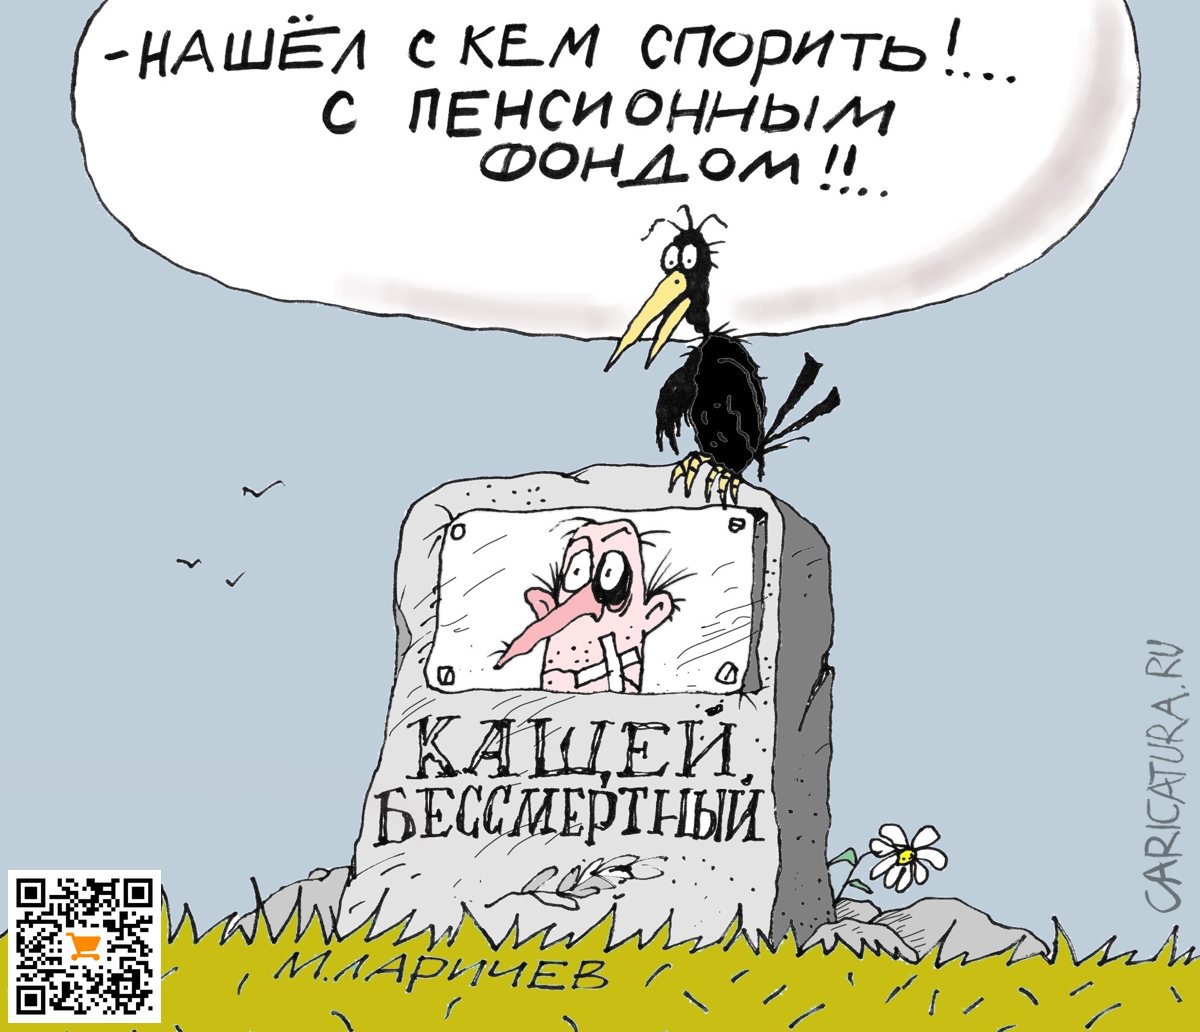 Карикатура "Кащей", Михаил Ларичев